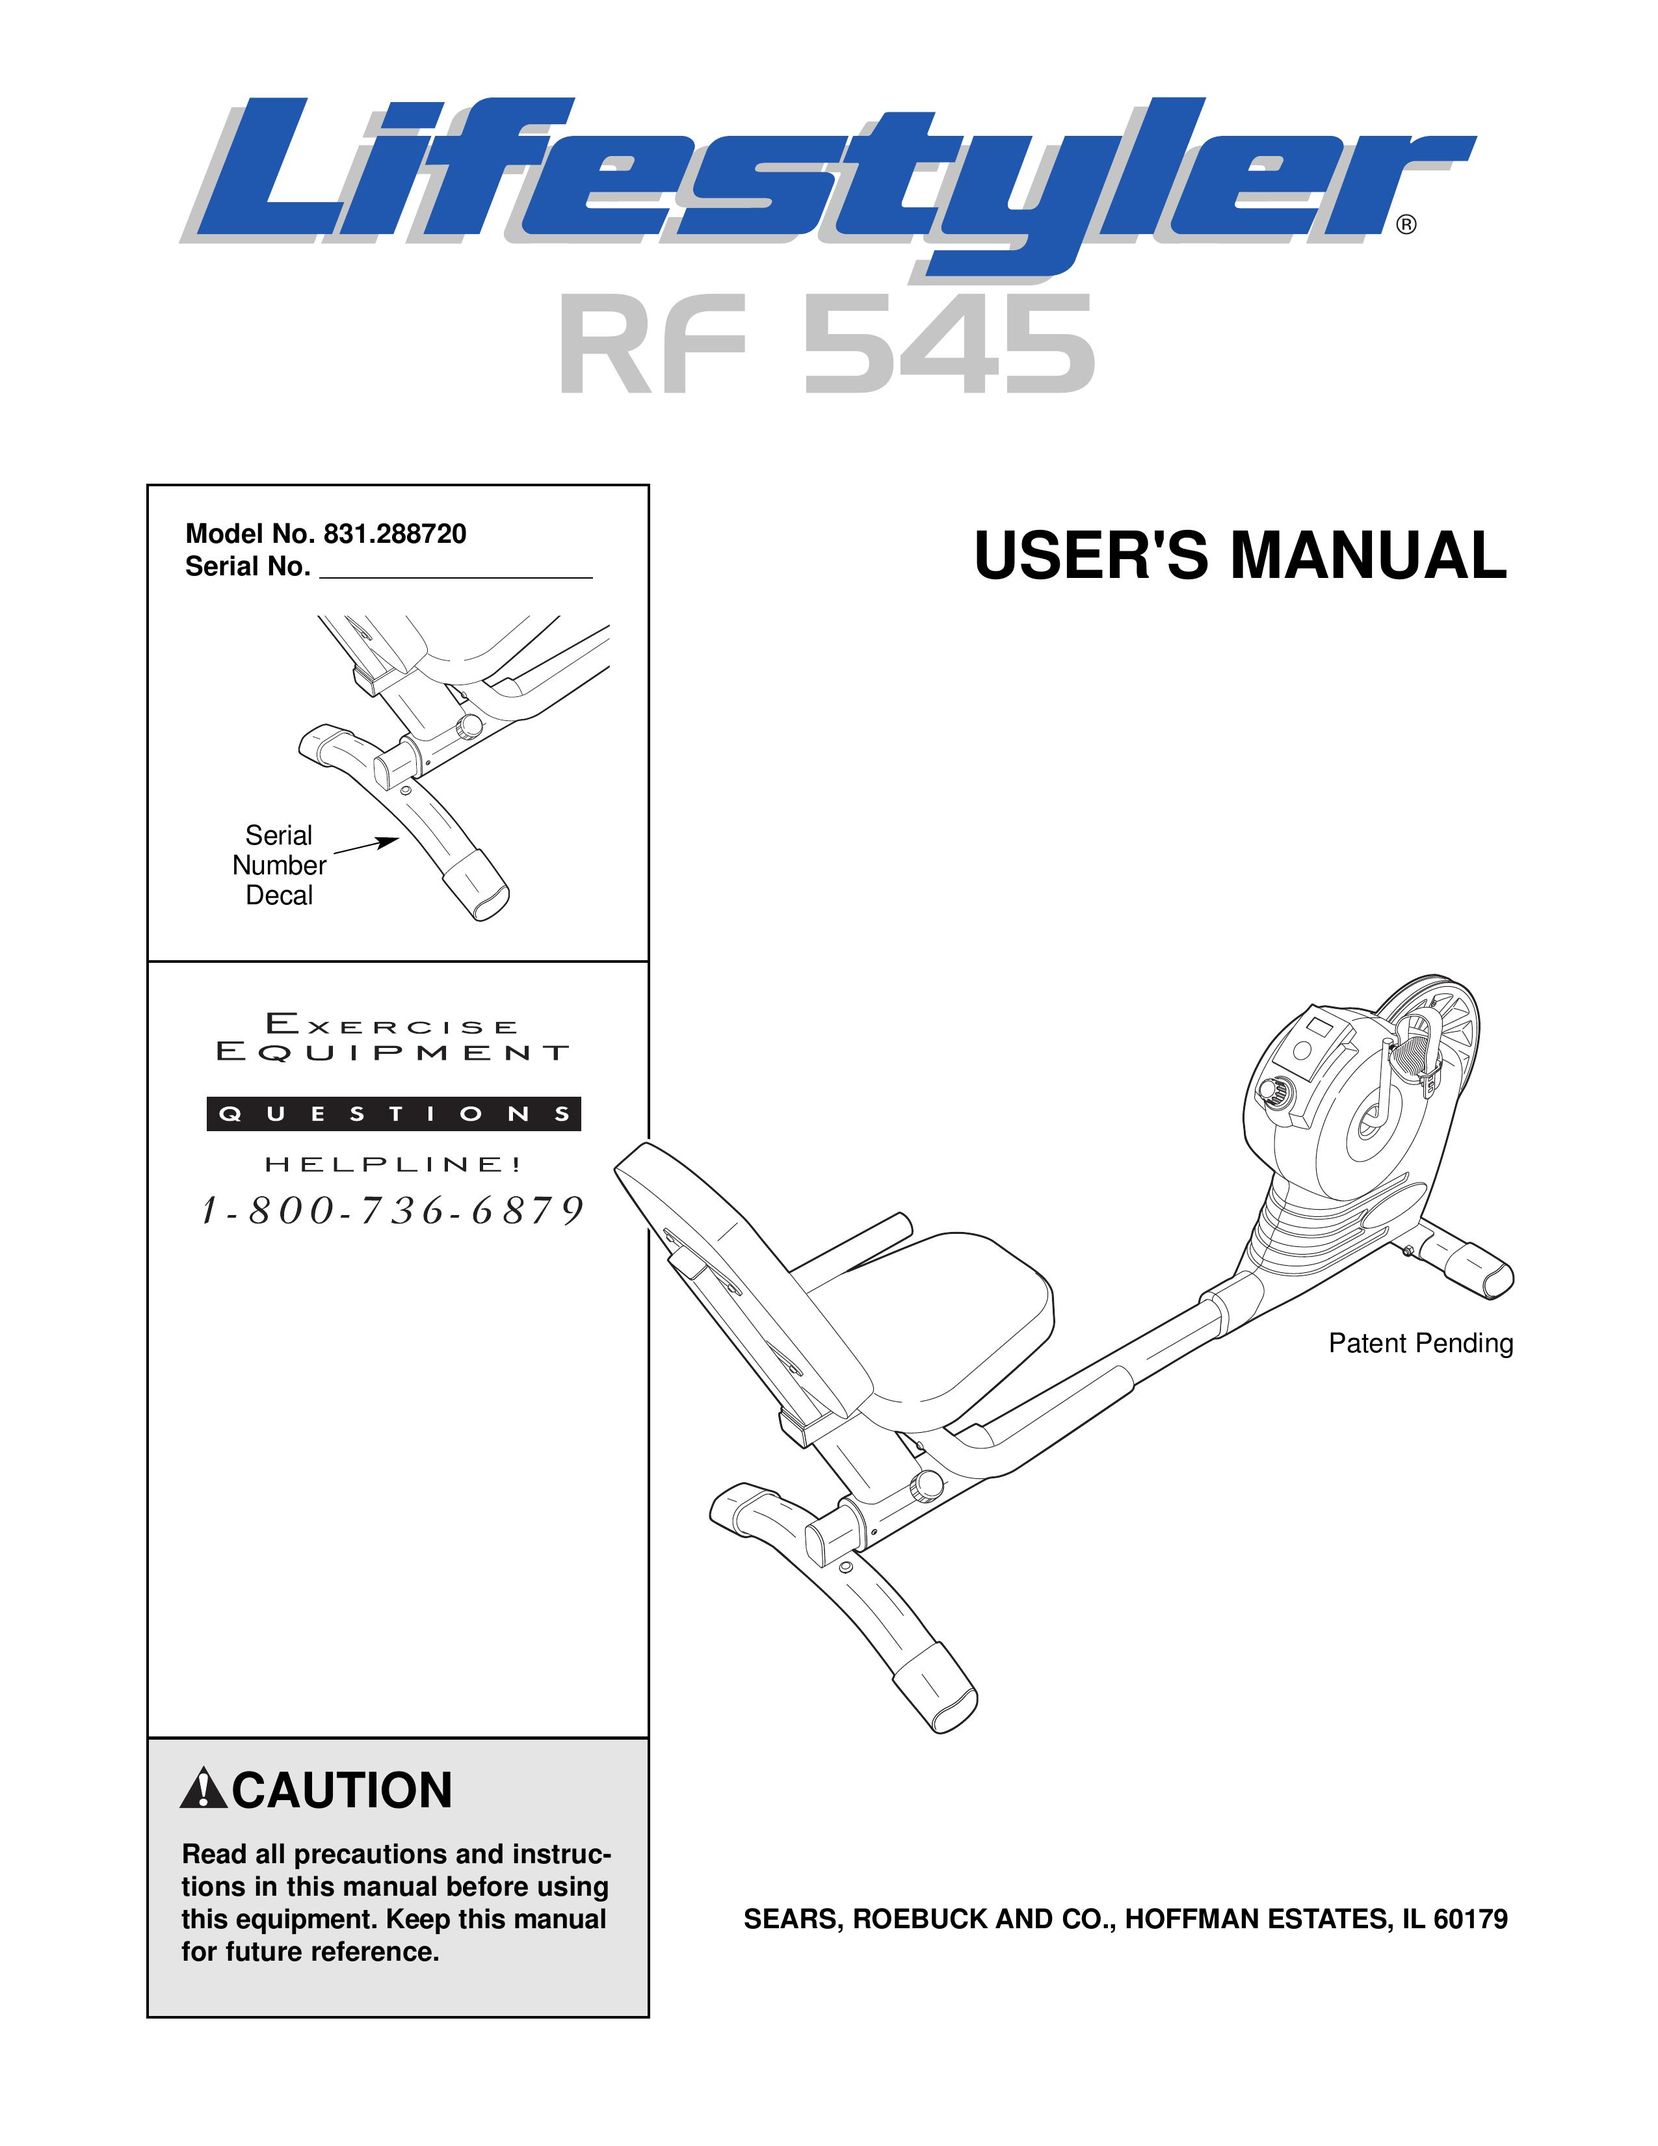 Sears 831.288720 Home Gym User Manual